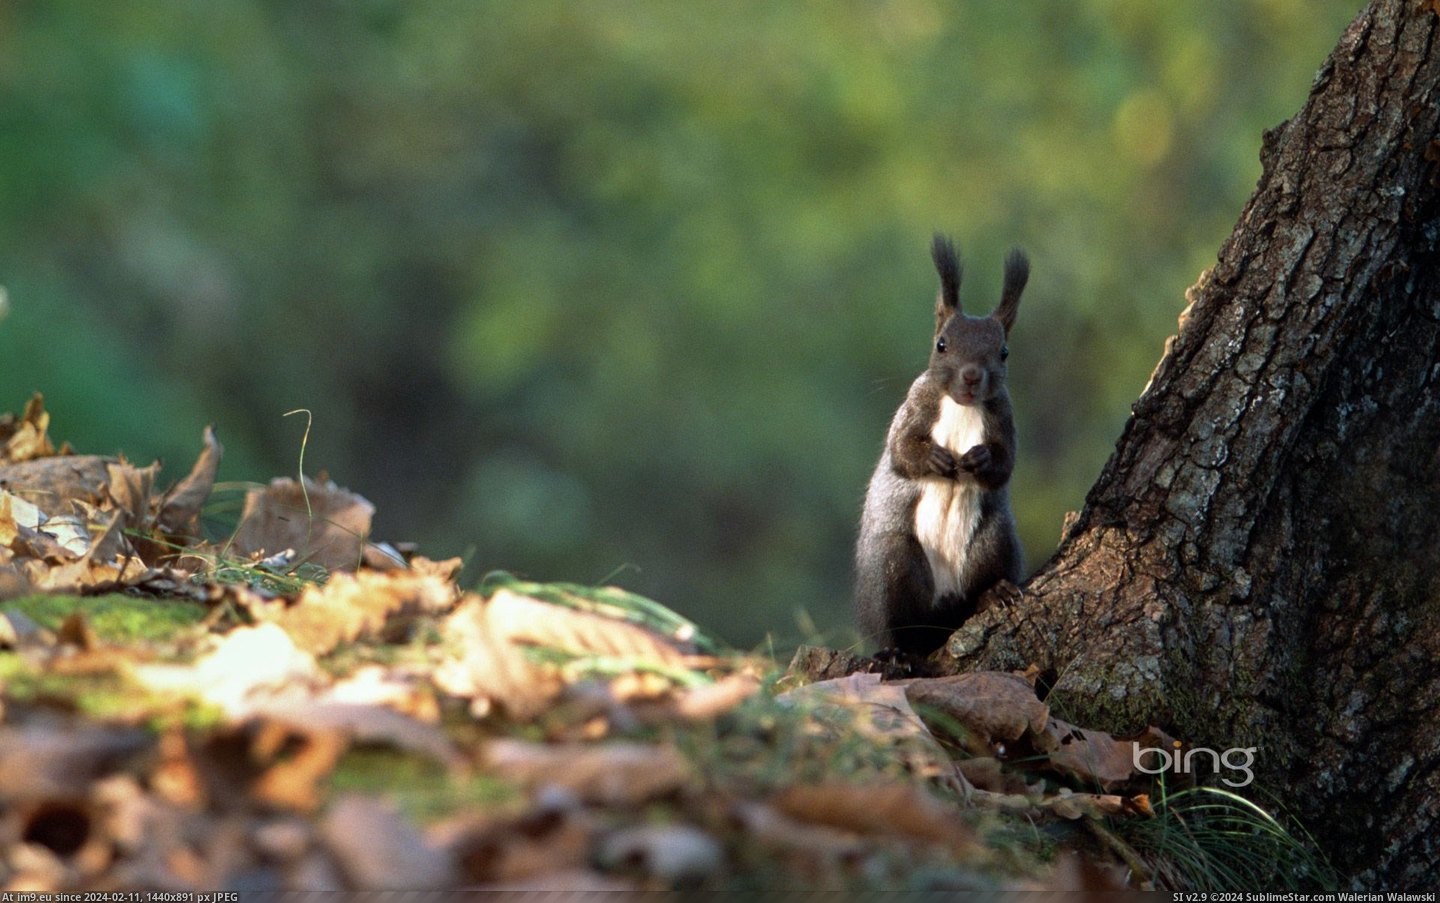 Hokkaido Squirrel (©Datacraft - UIG - age fotostock) (in Best photos of January 2013)